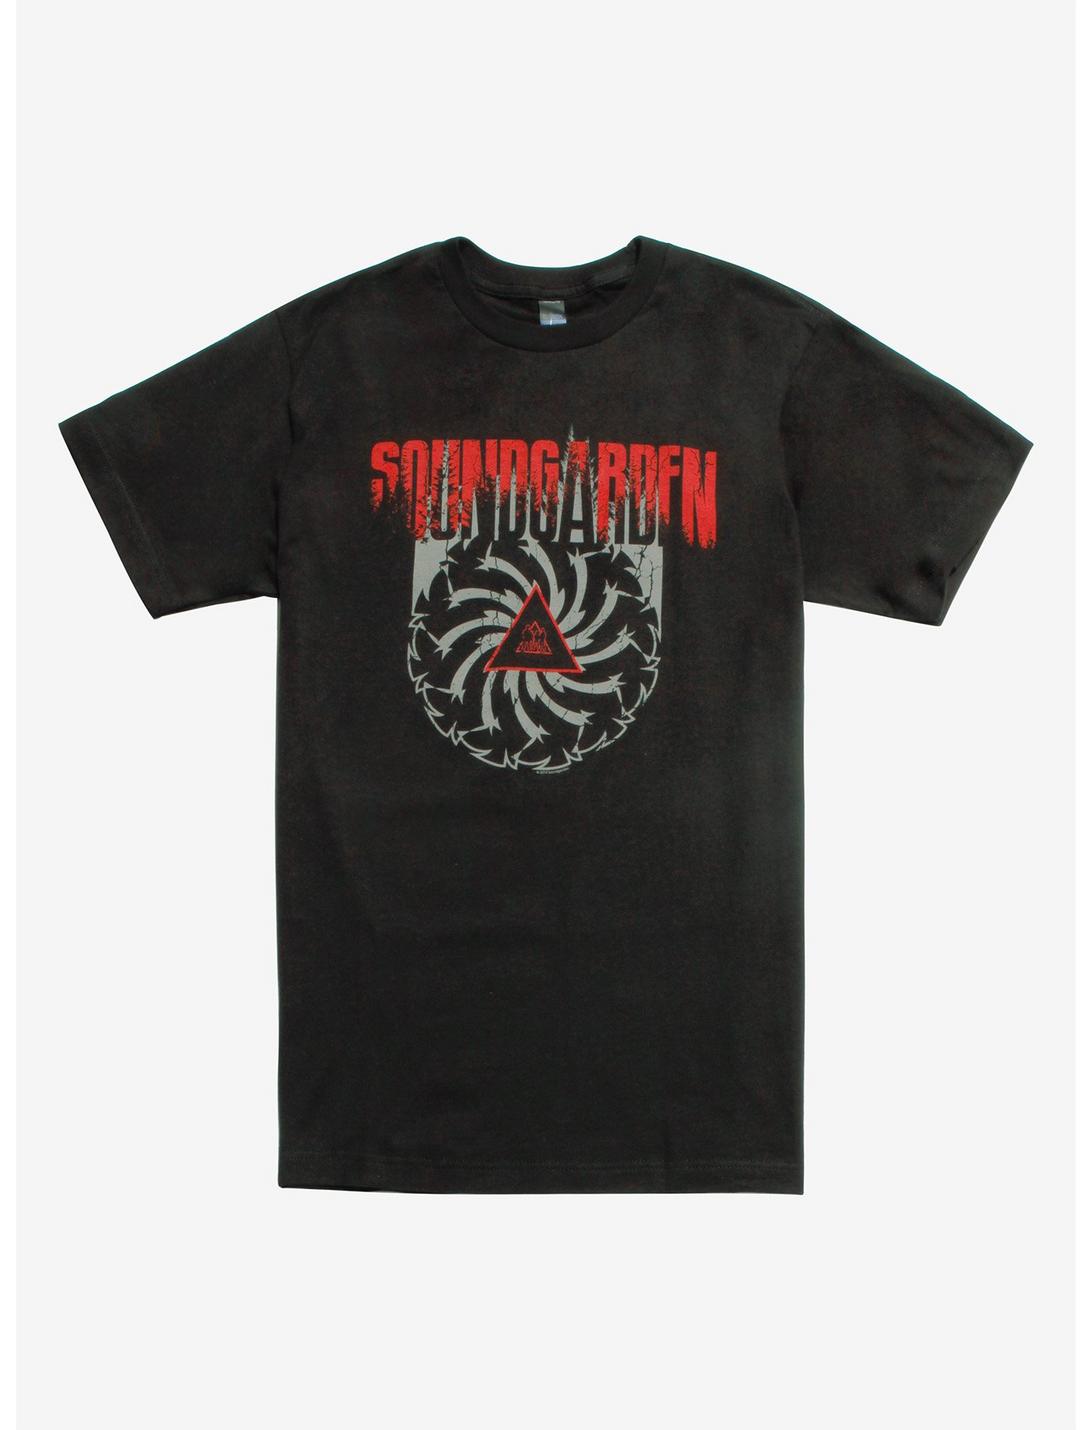 Soundgarden Badmotorfinger Album Cover T-Shirt, BLACK, hi-res